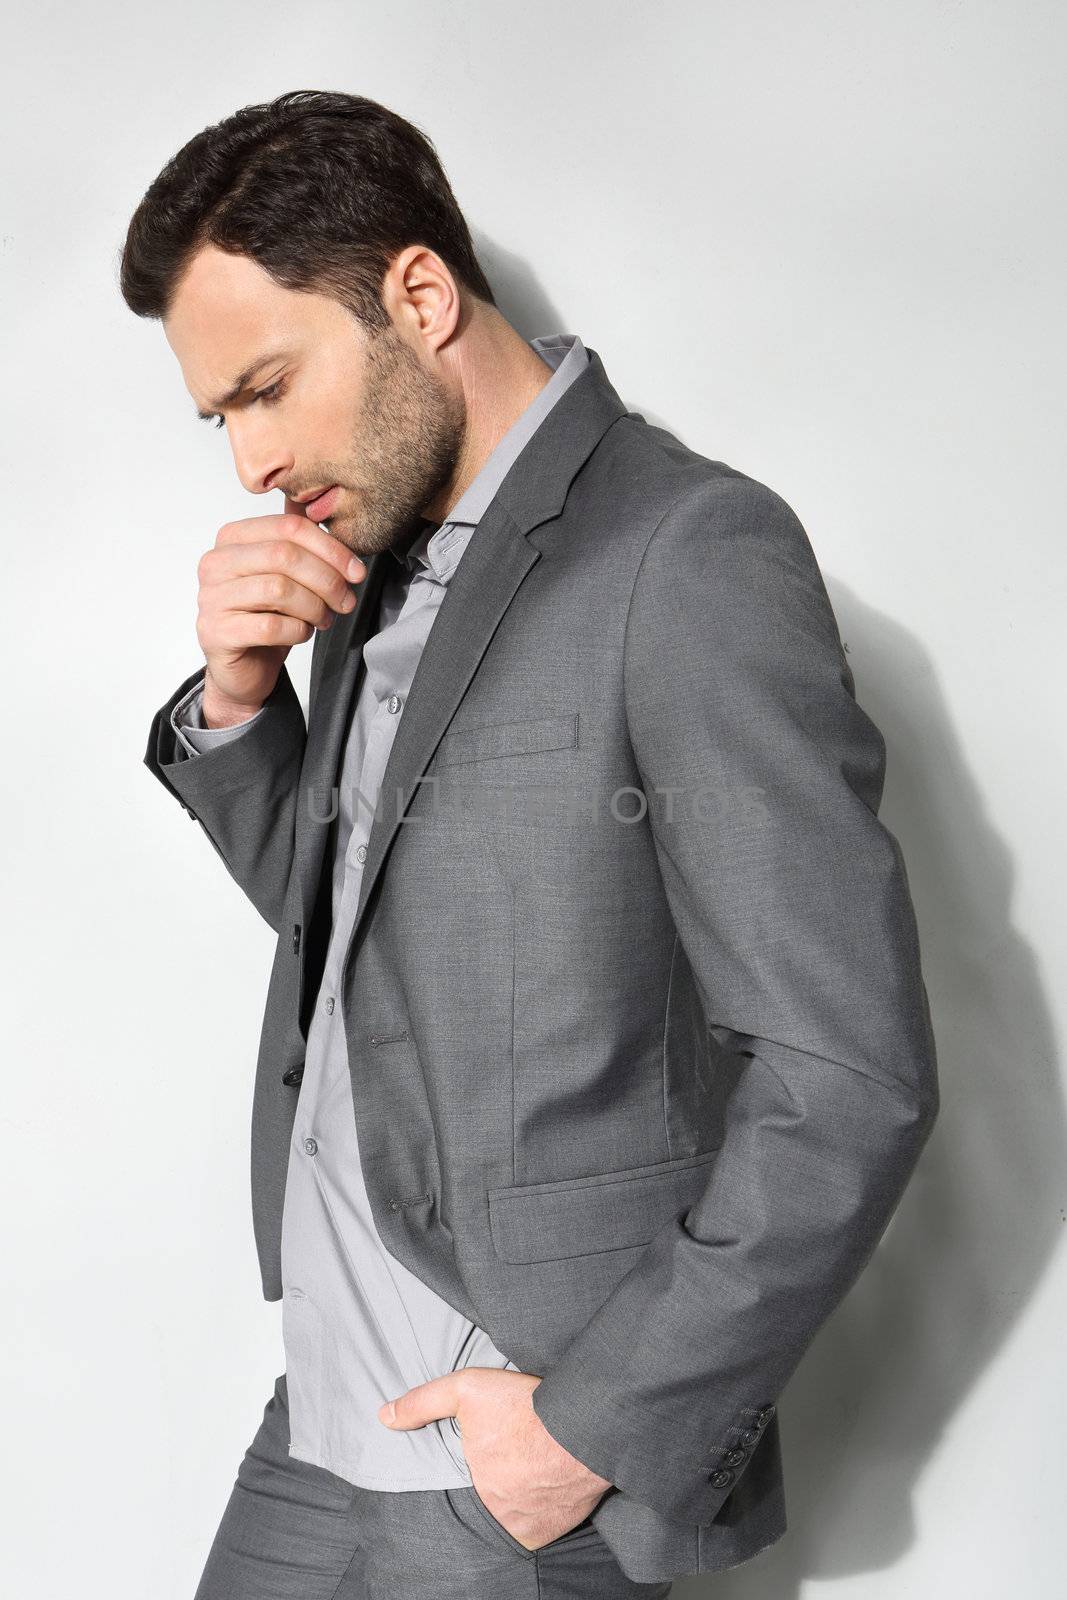 Young stylish man on a gray background by robert_przybysz